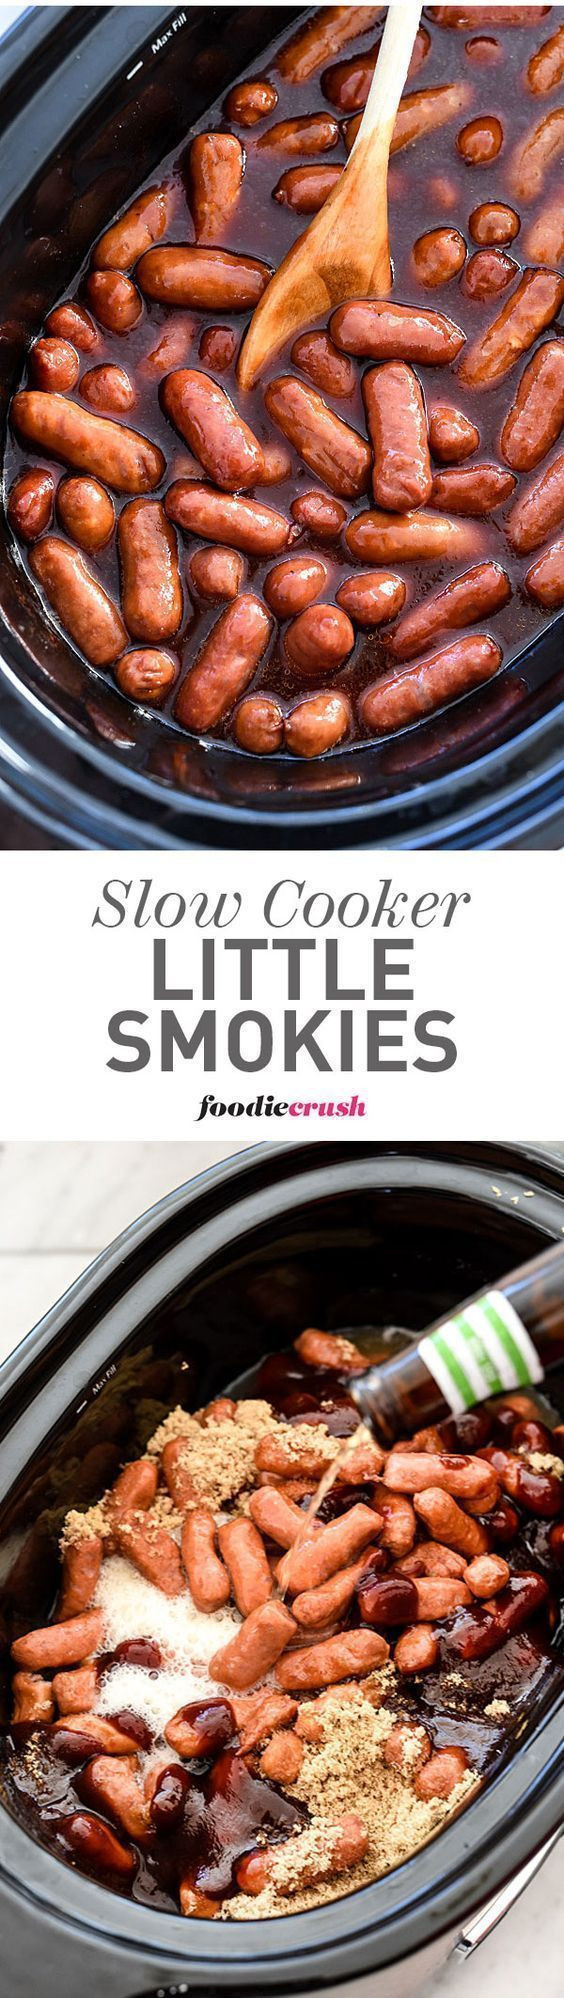 14 Easy Slow Cooker Appetizers
 Slow Cooker Little Smokies